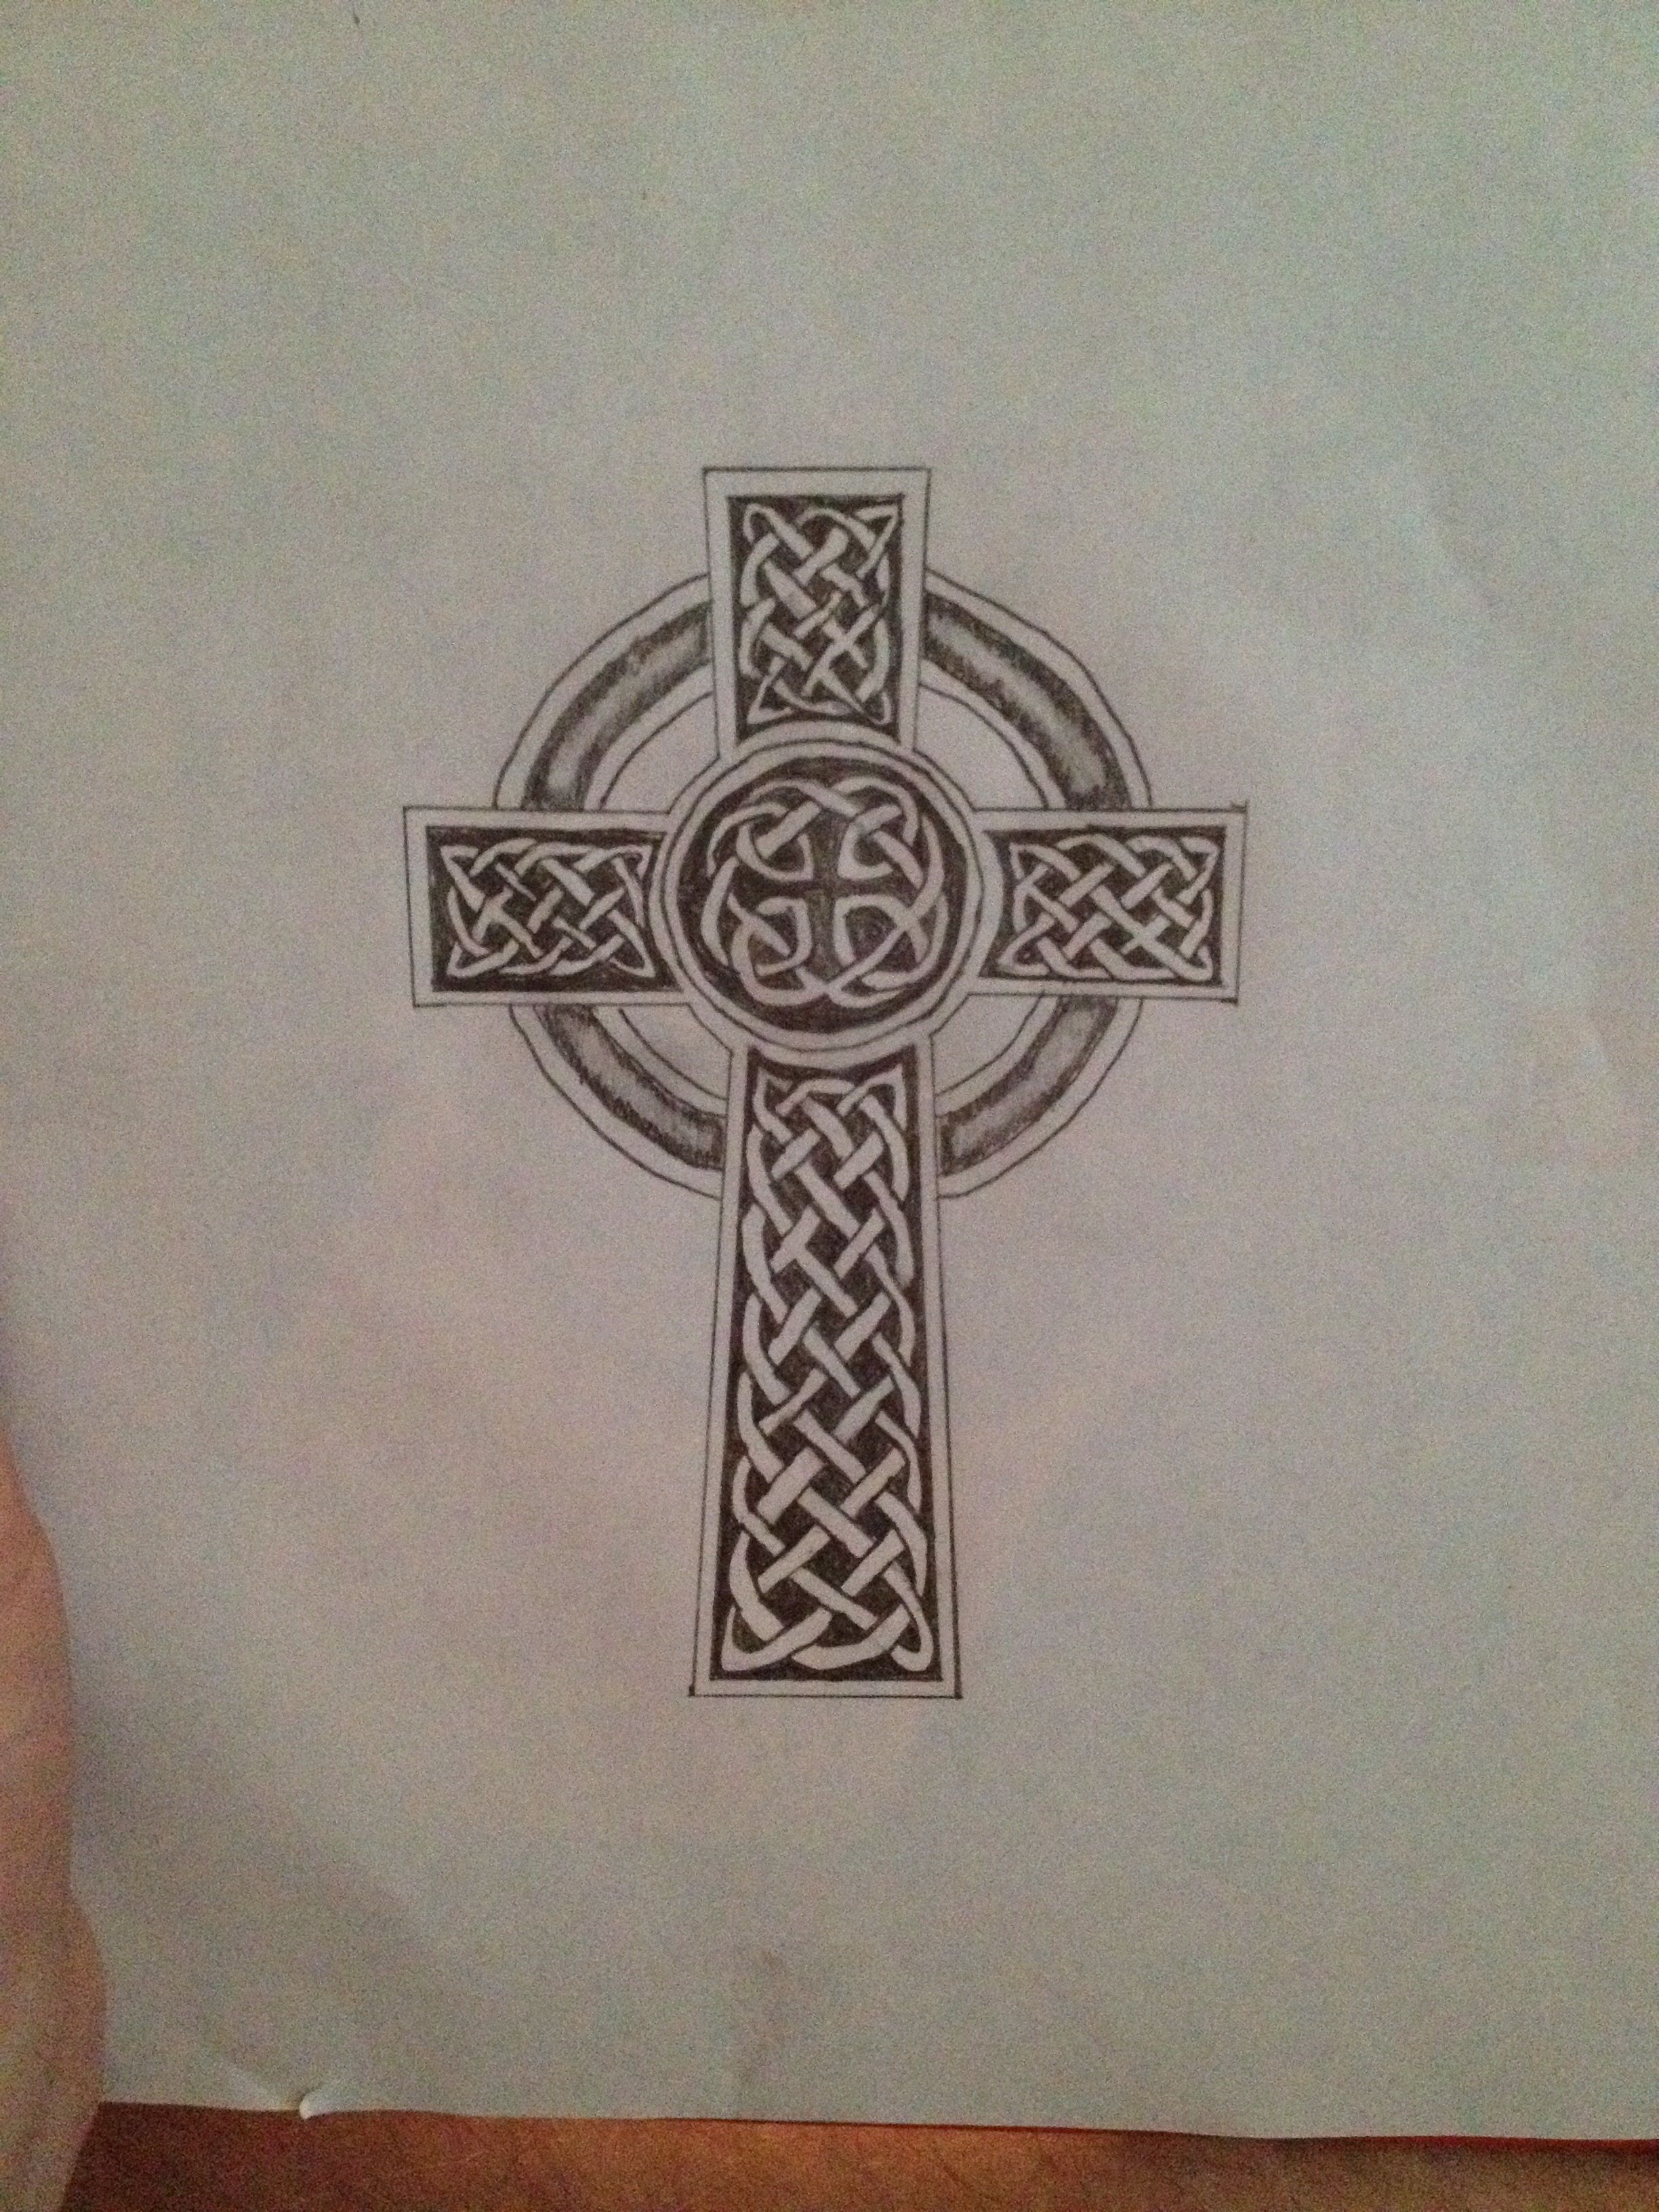 Celtic Cross Tattoo Design For My Left Shoulder Blade Ink Celtic throughout dimensions 2448 X 3264